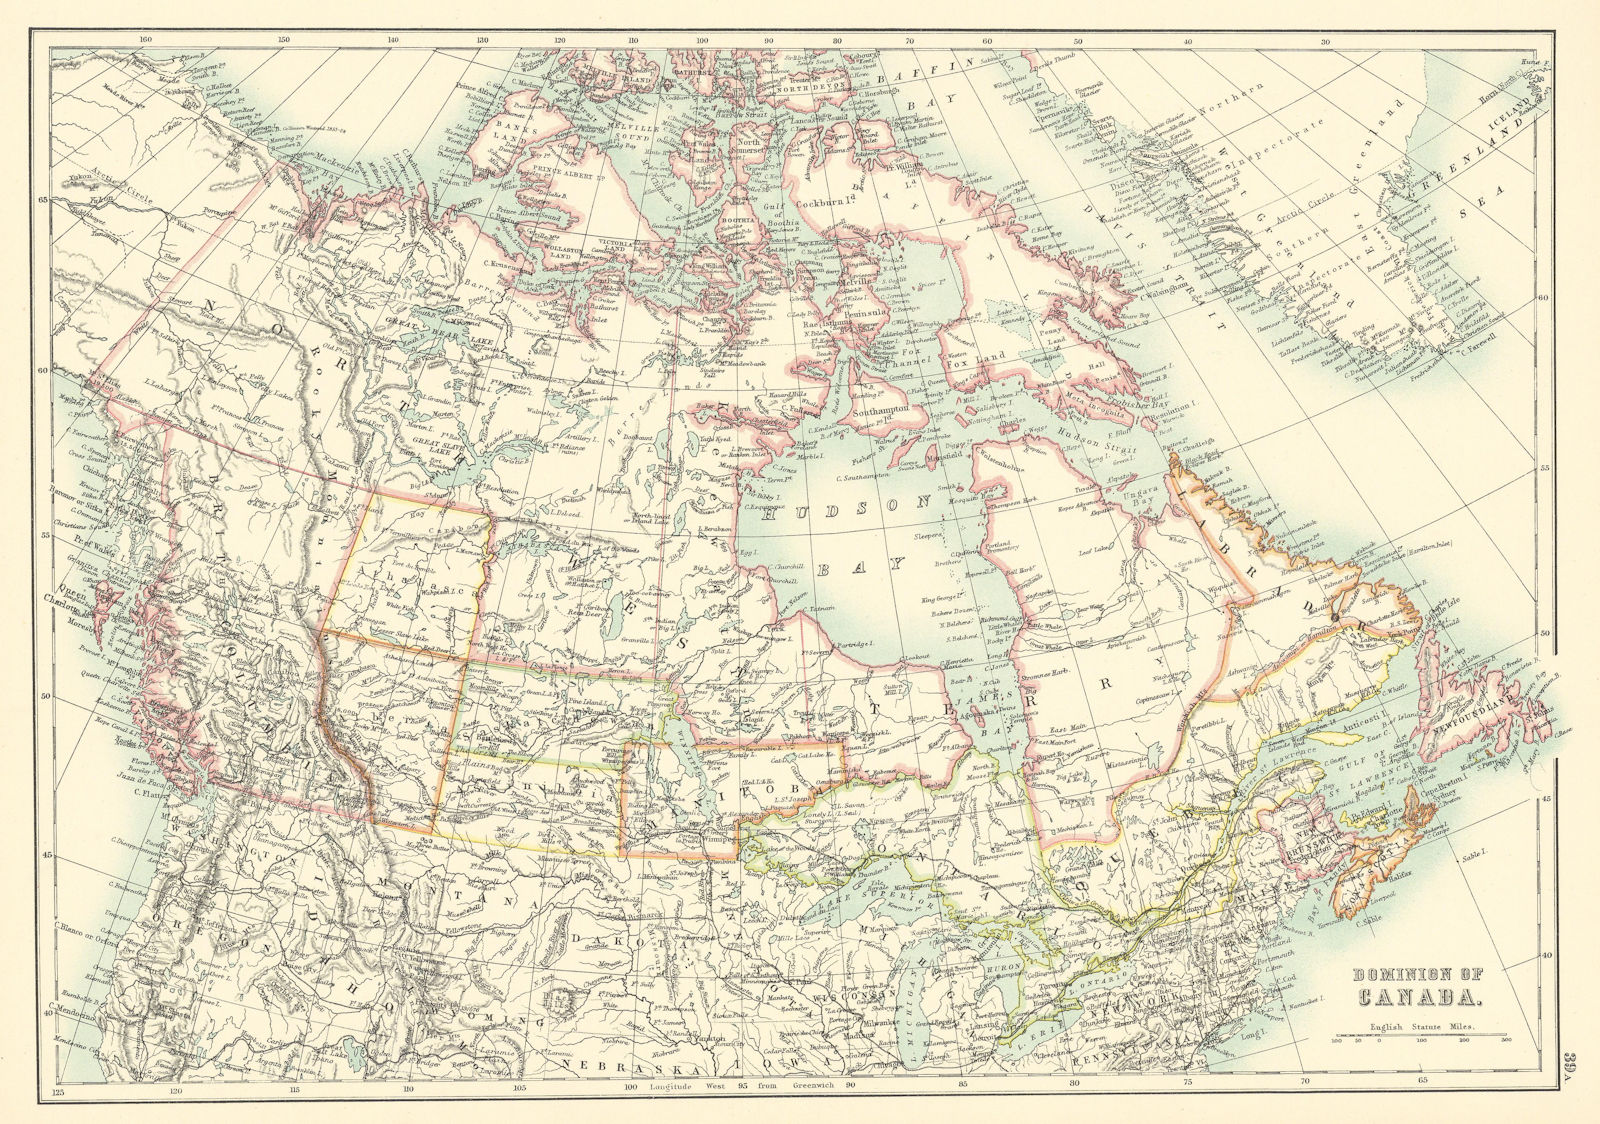 Associate Product Dominion of Canada. Athabasca Assiniboia. BARTHOLOMEW 1898 old antique map